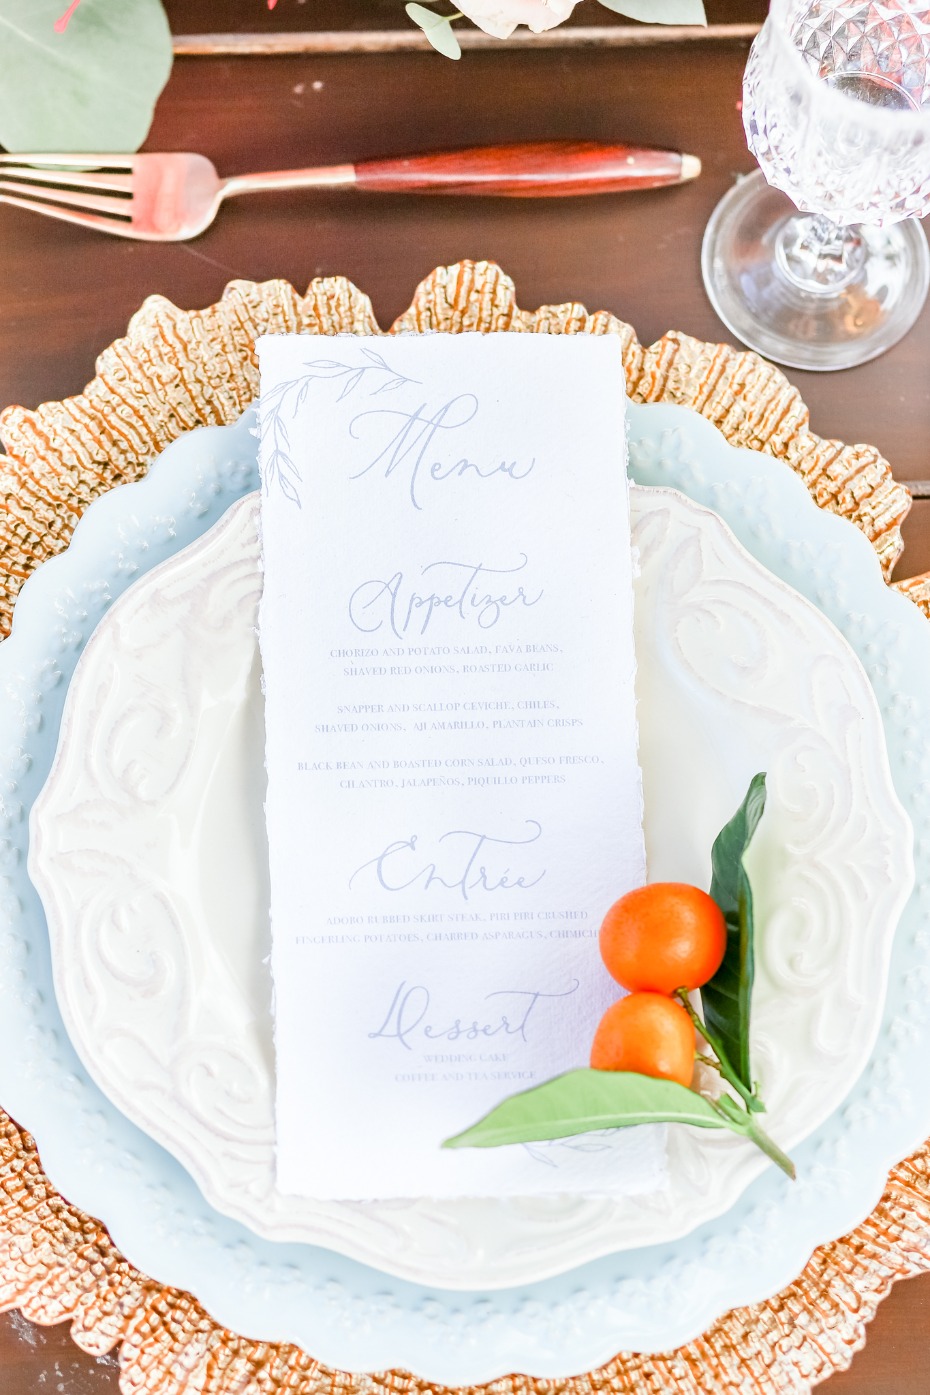 Wedding menu and kumquats